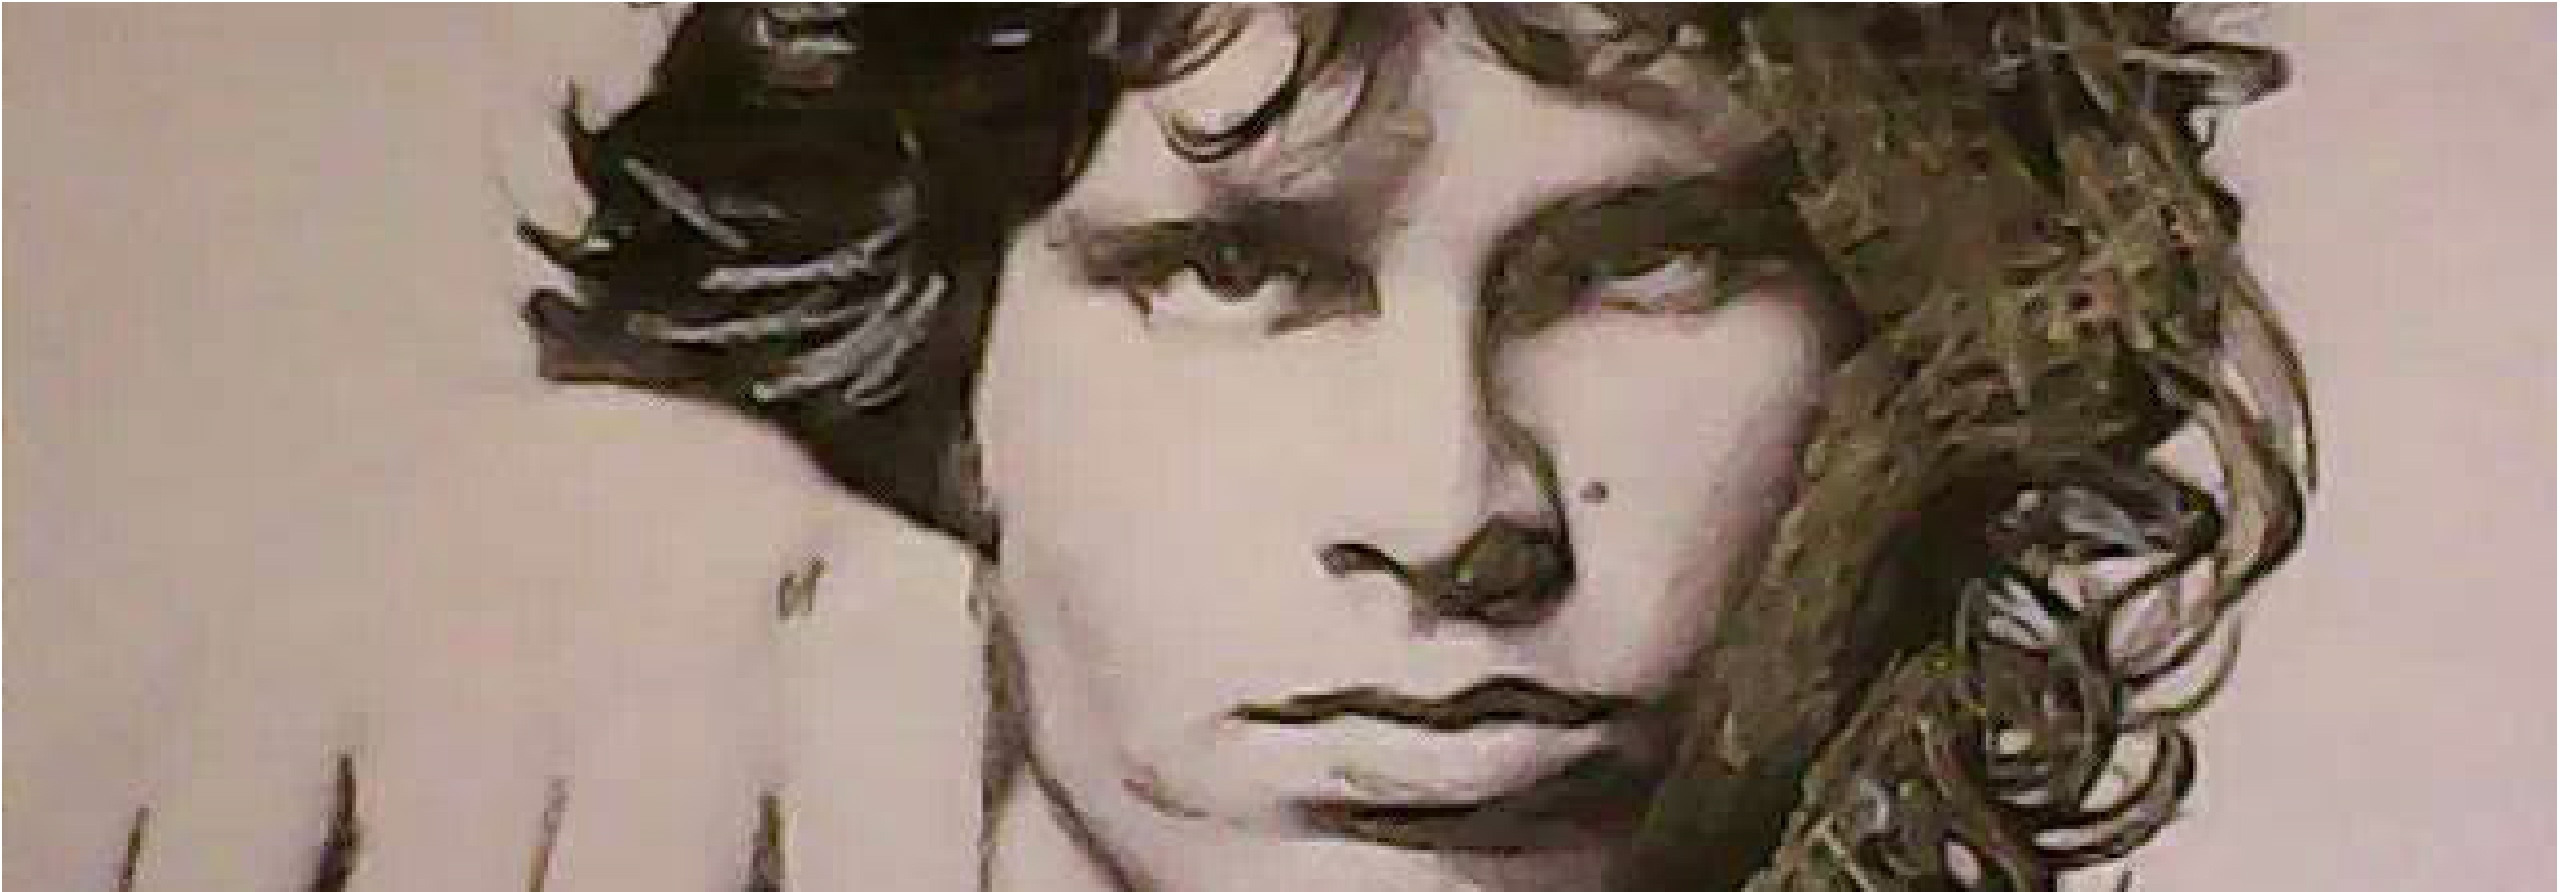 Jim Morrison Pencil Sketch By Raychel "Mad Hatter" George